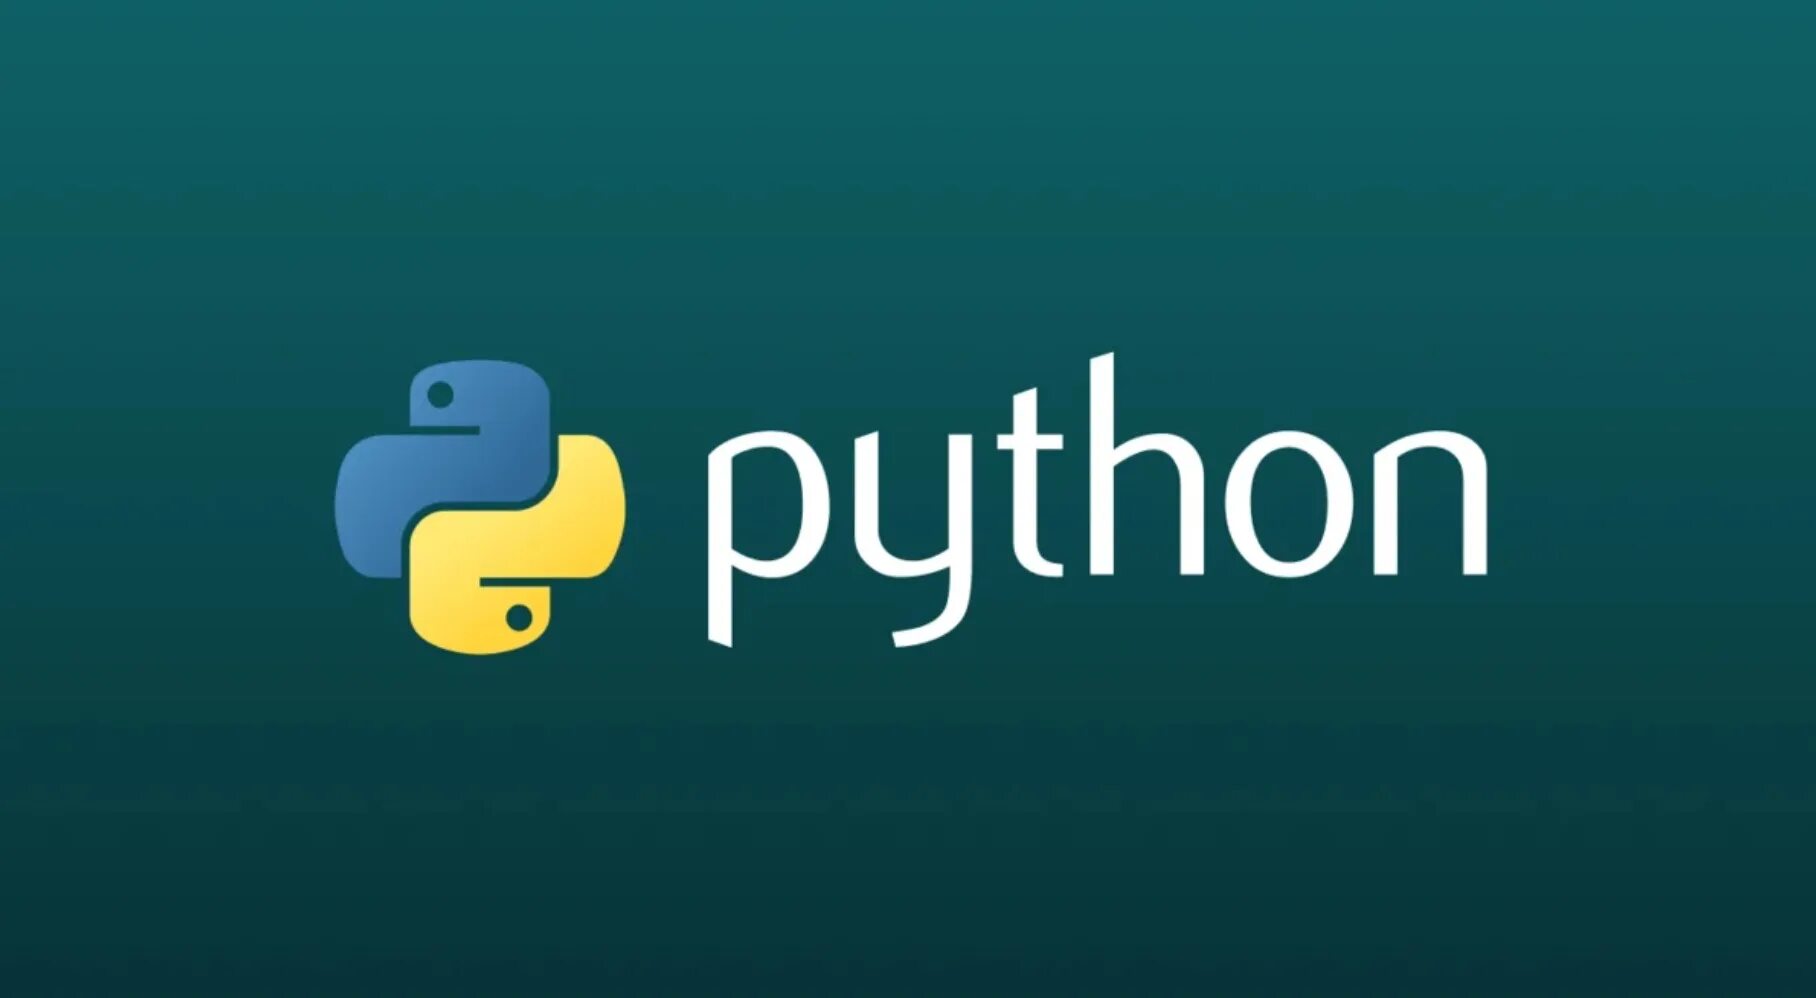 Python shall. Gbnjyязык программирования. Язык программирования Python. Питон программирование. Пион язык программирования.